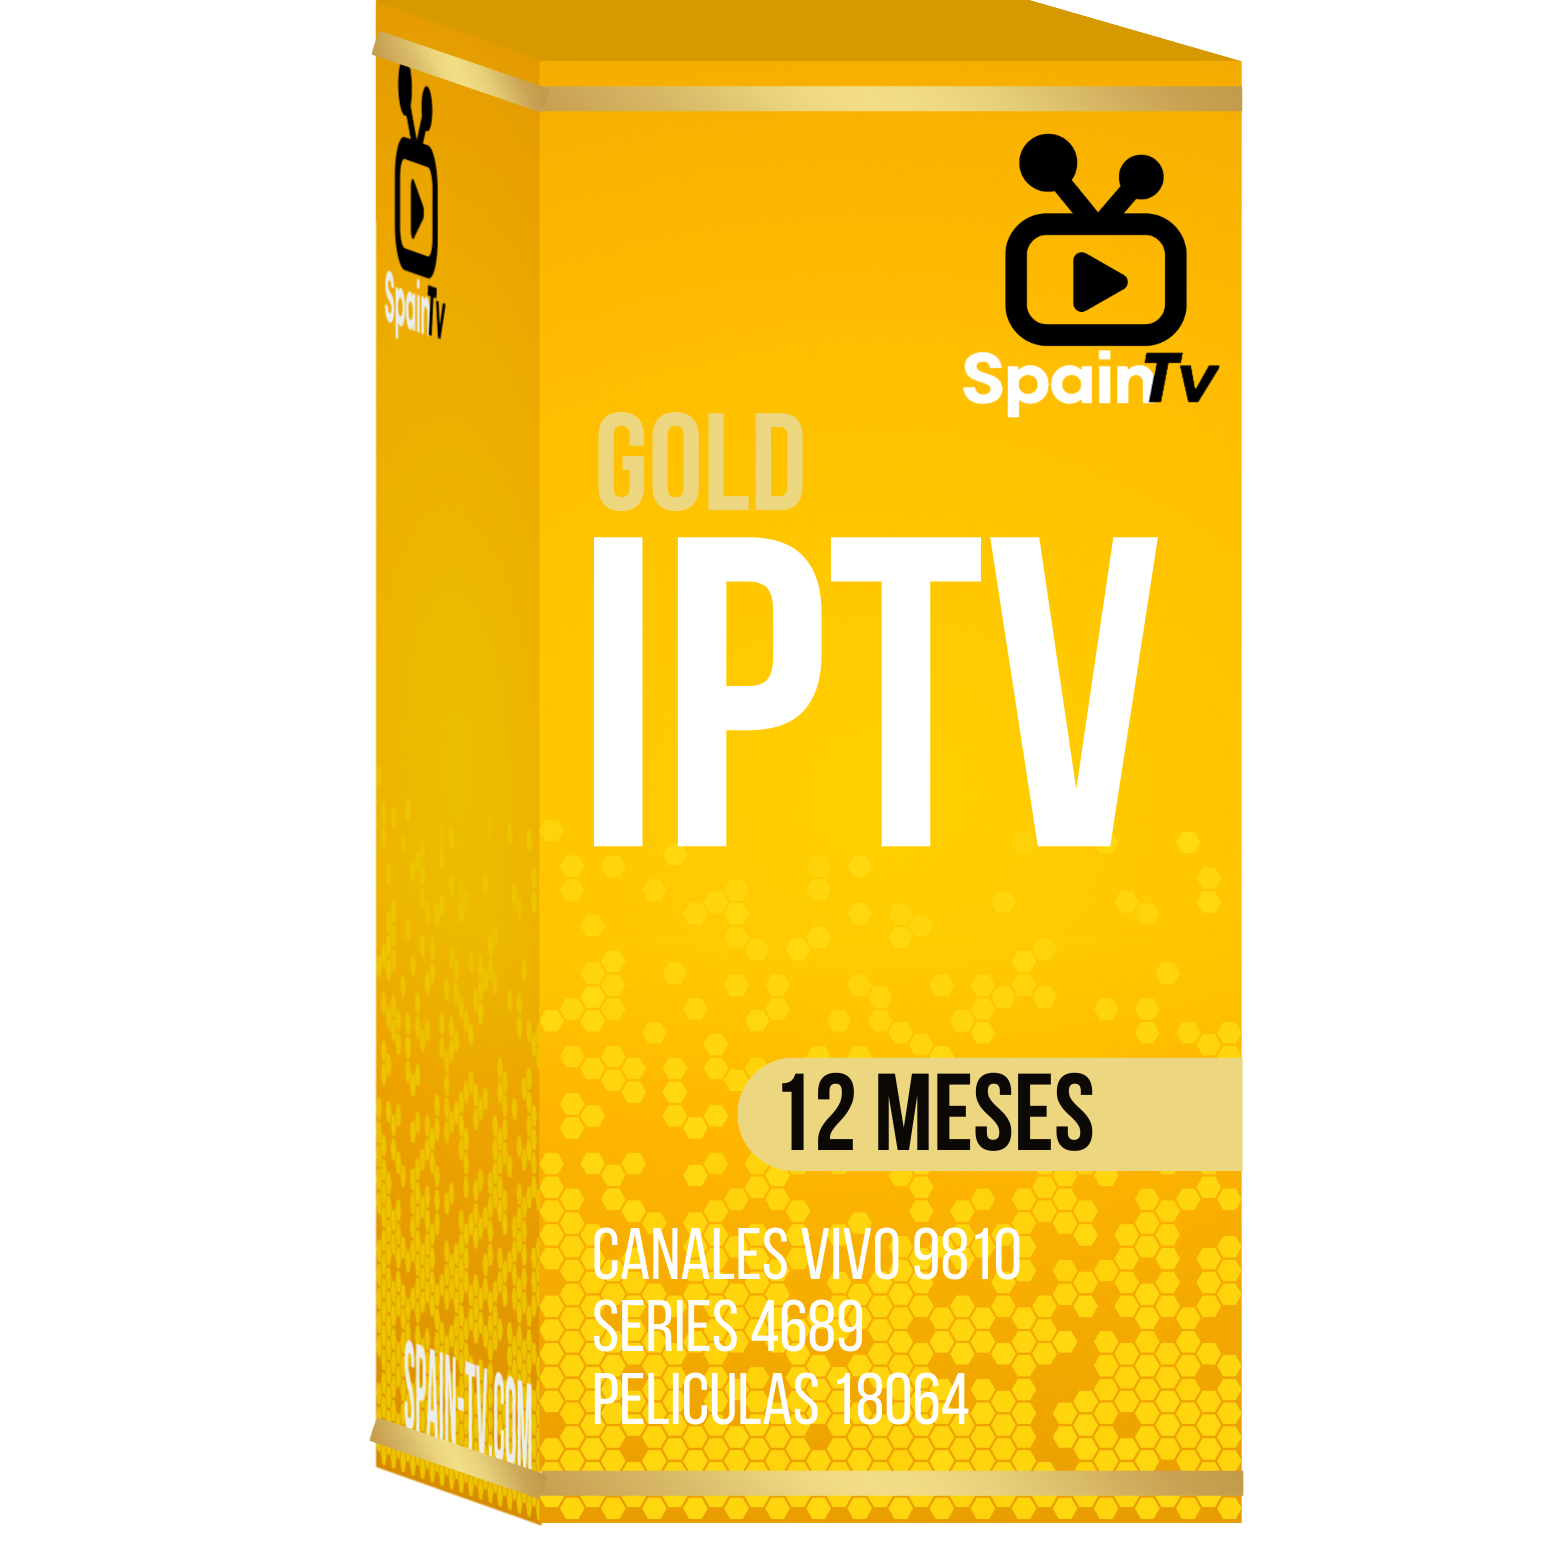 SPAIN TV IPTV GOLD (12 MESES) – SPAIN TV